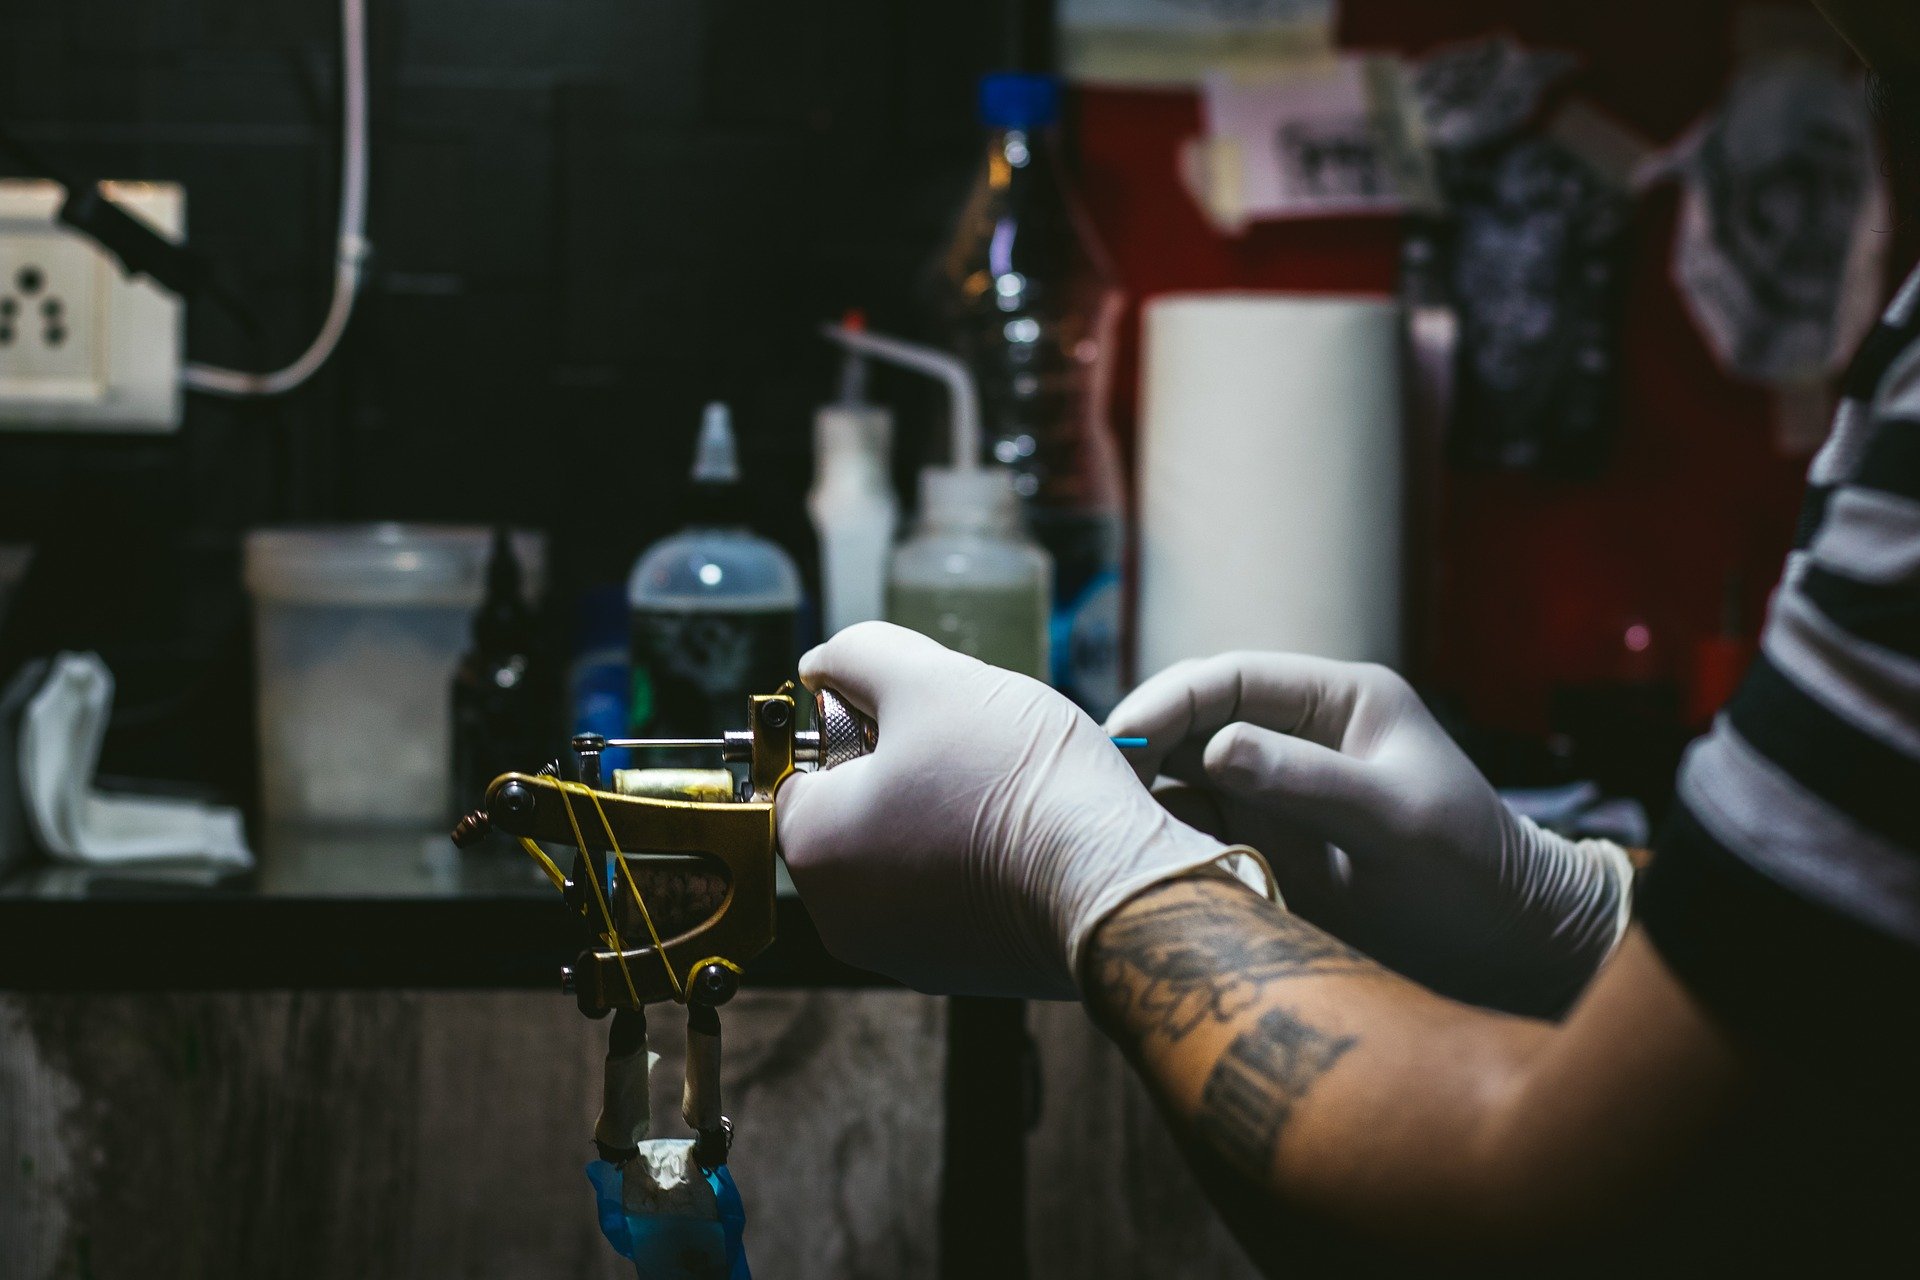 A tattoo artist at work. | Source: Pixabay